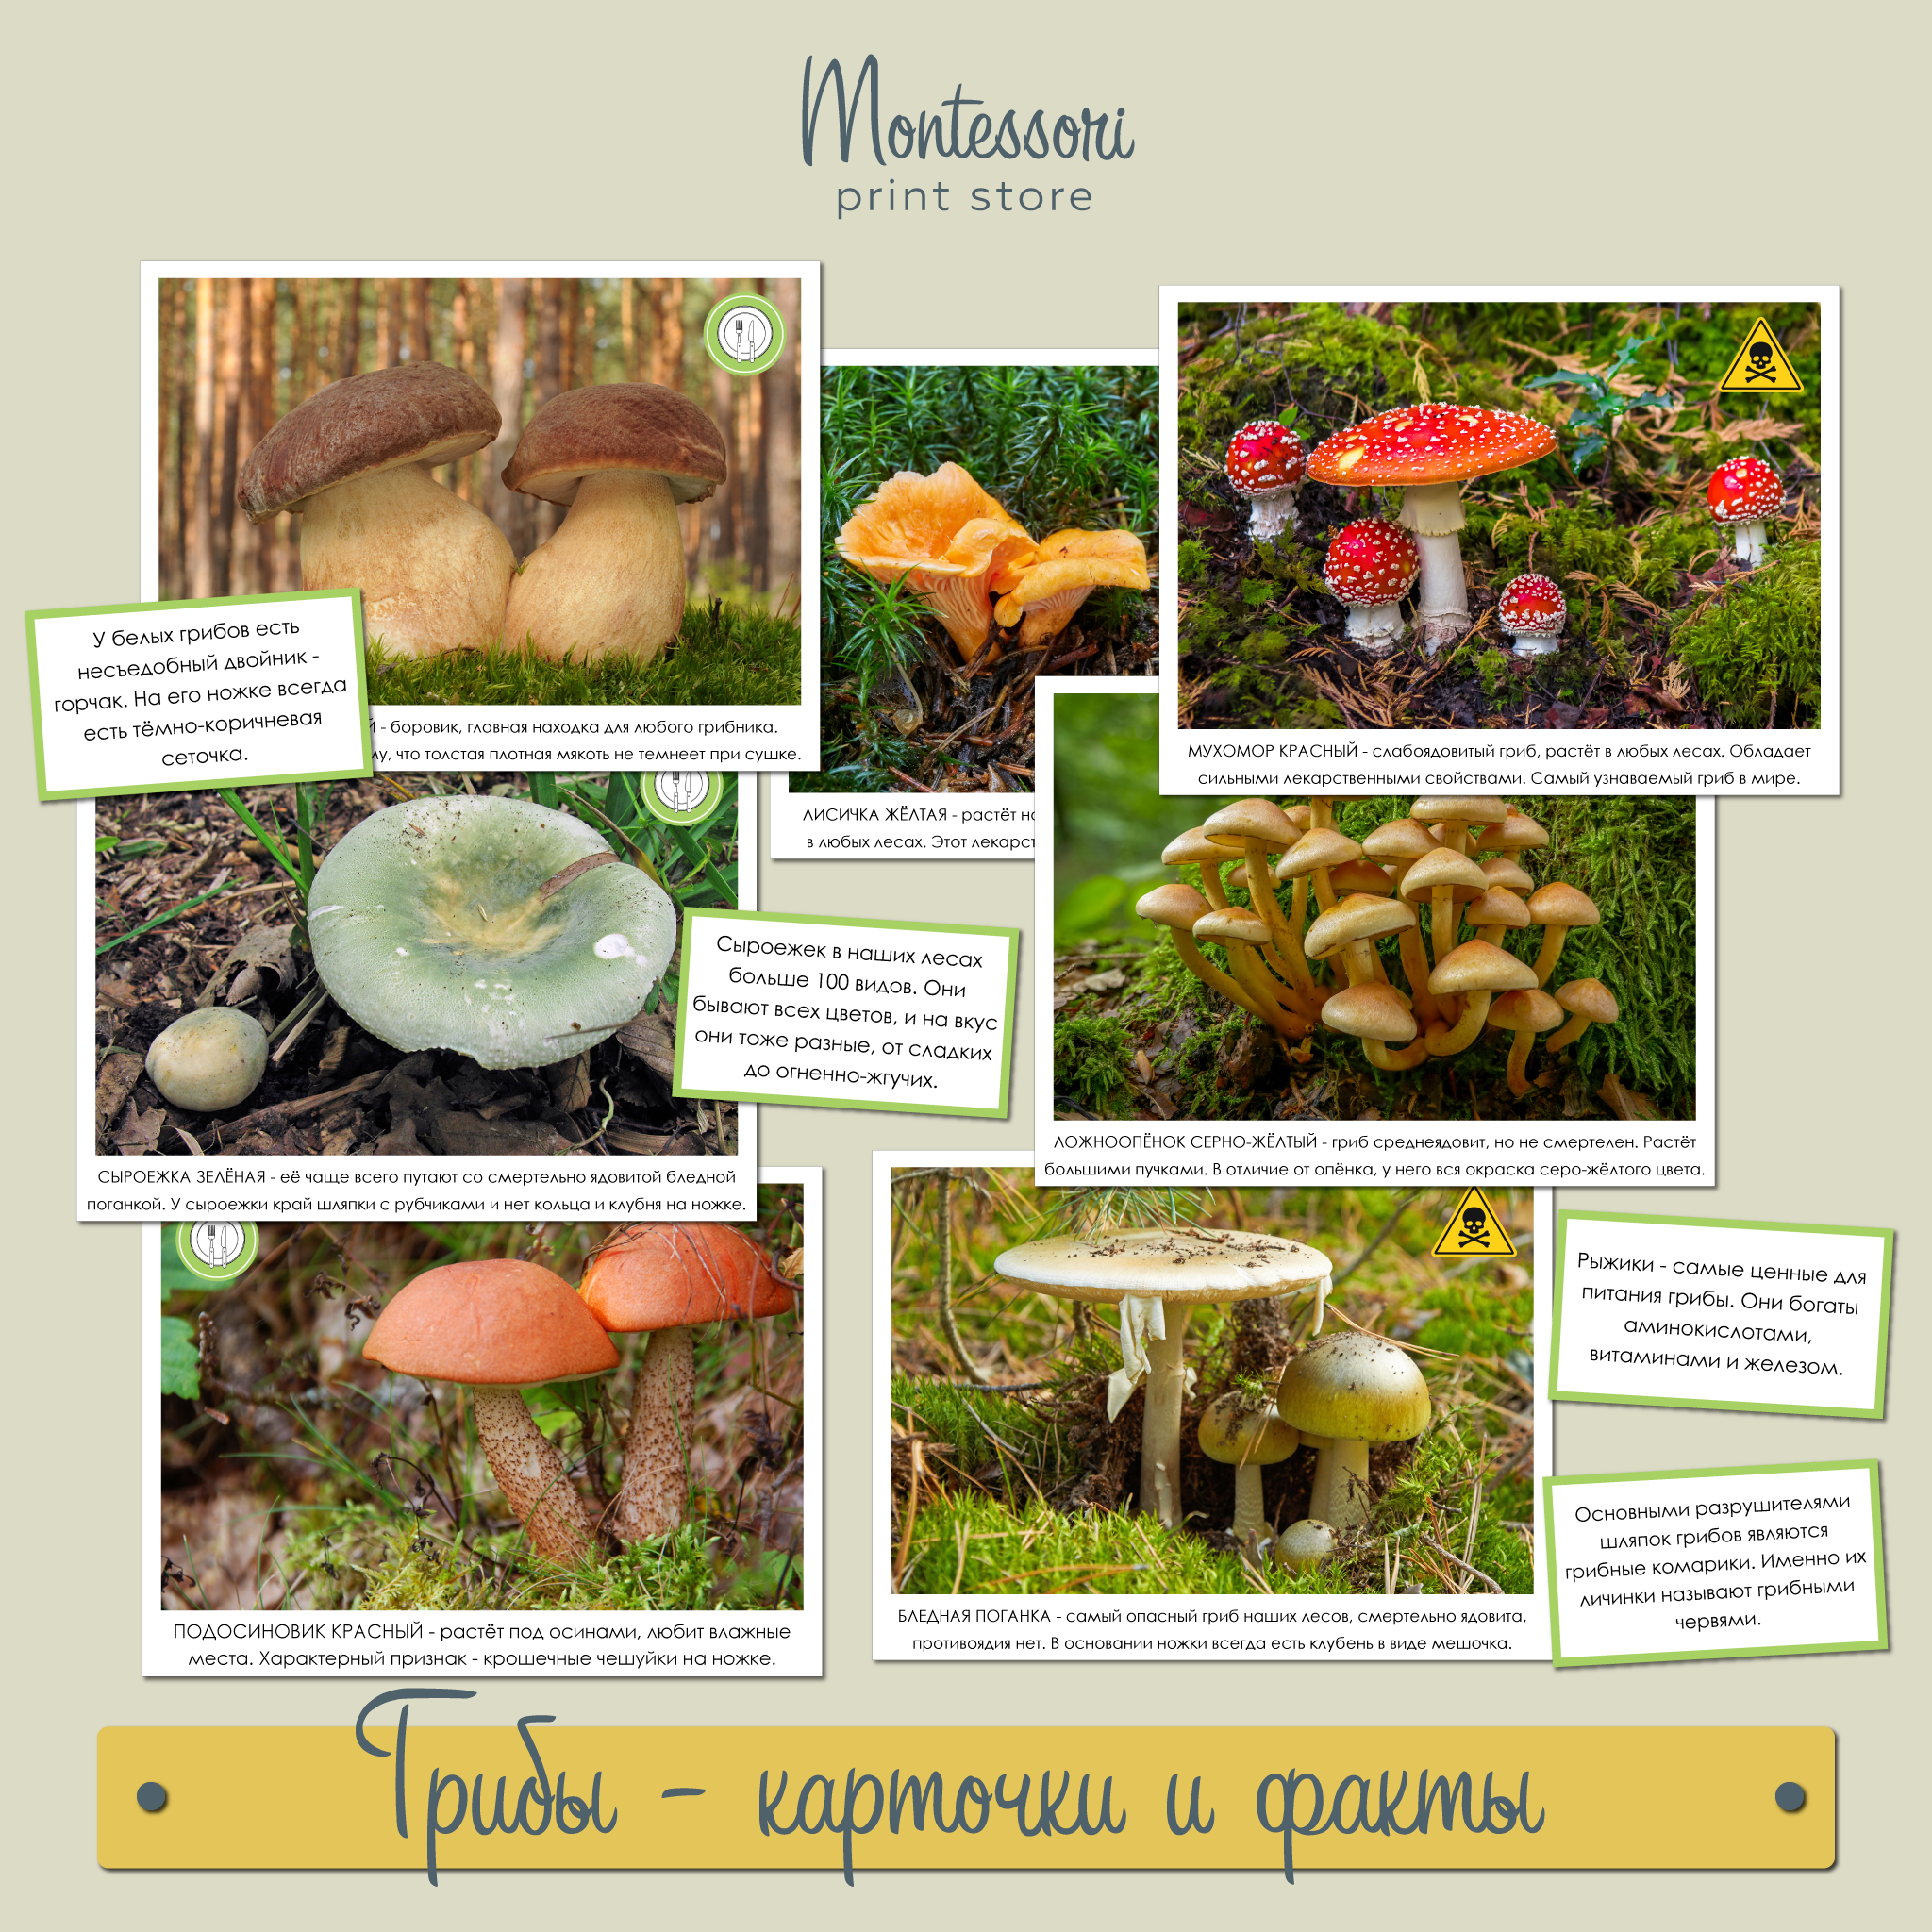 Условия развития грибов